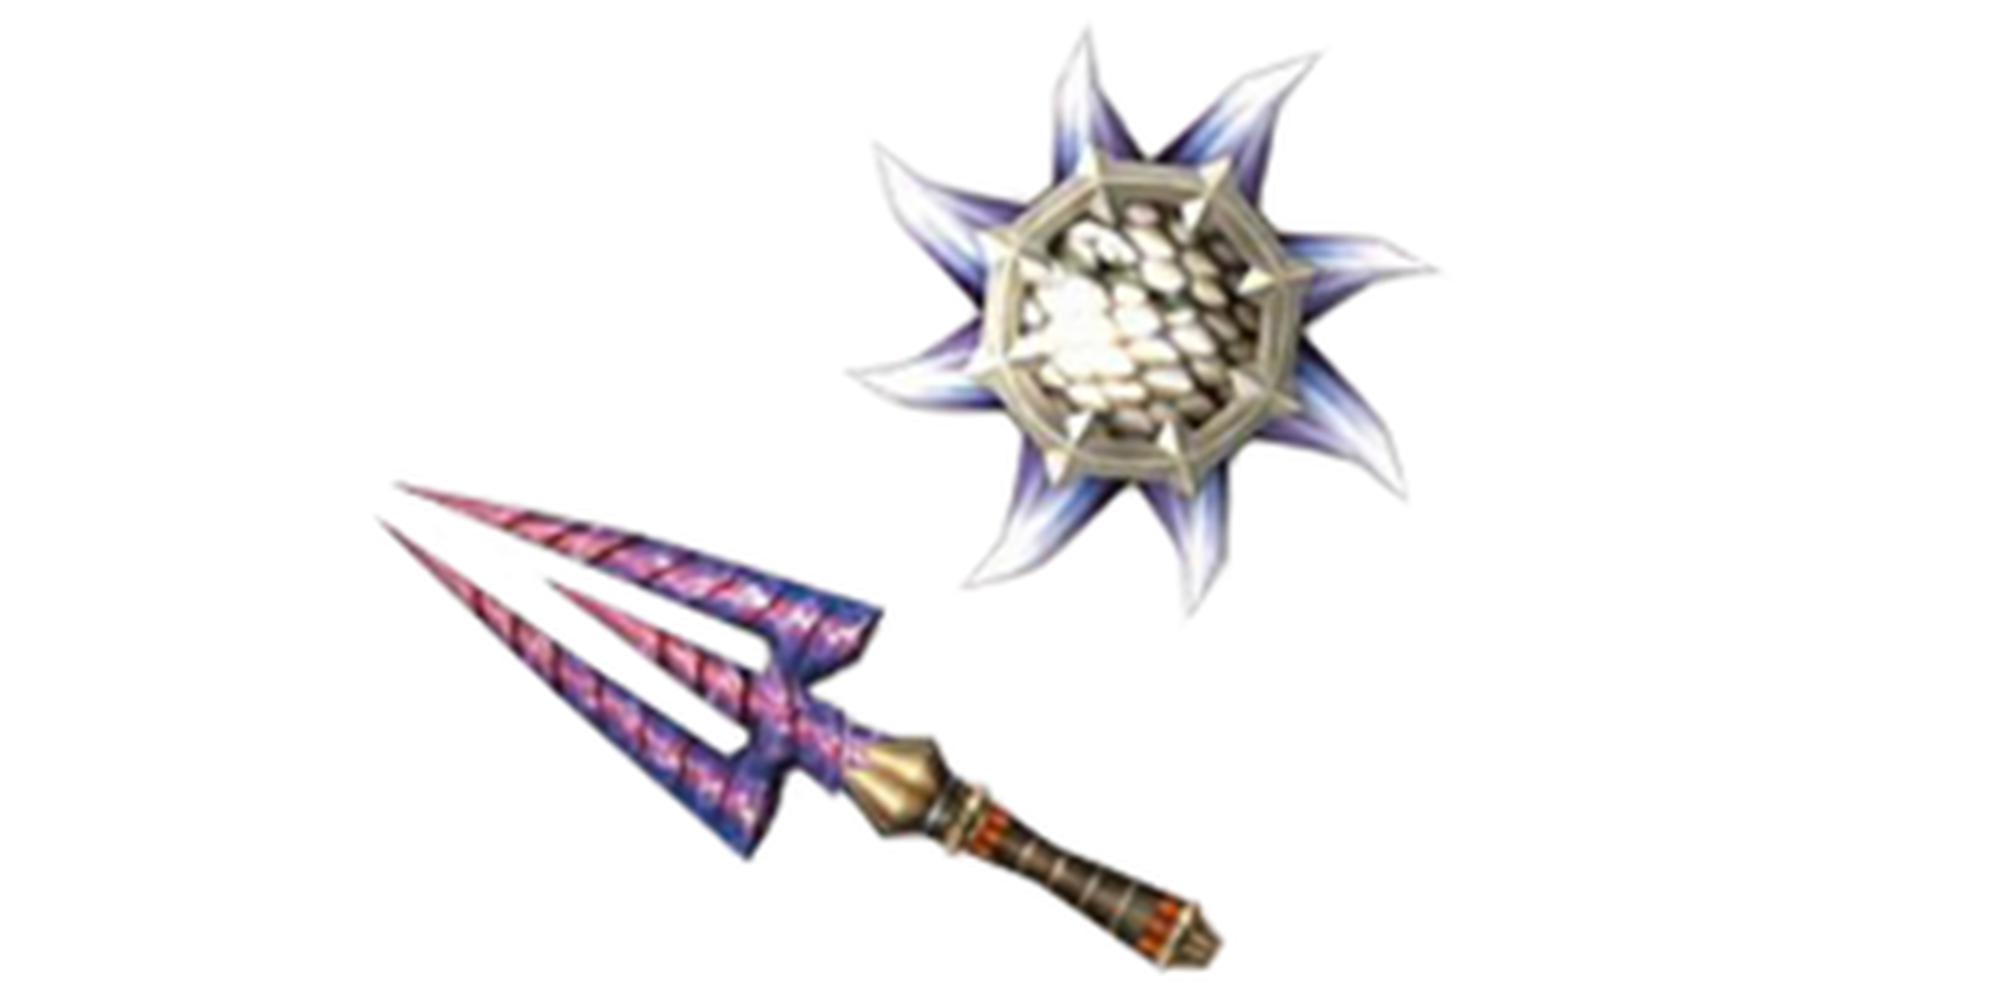 Kirin Bolt Maximus Sword and Shield from Monster Hunter Stories 2